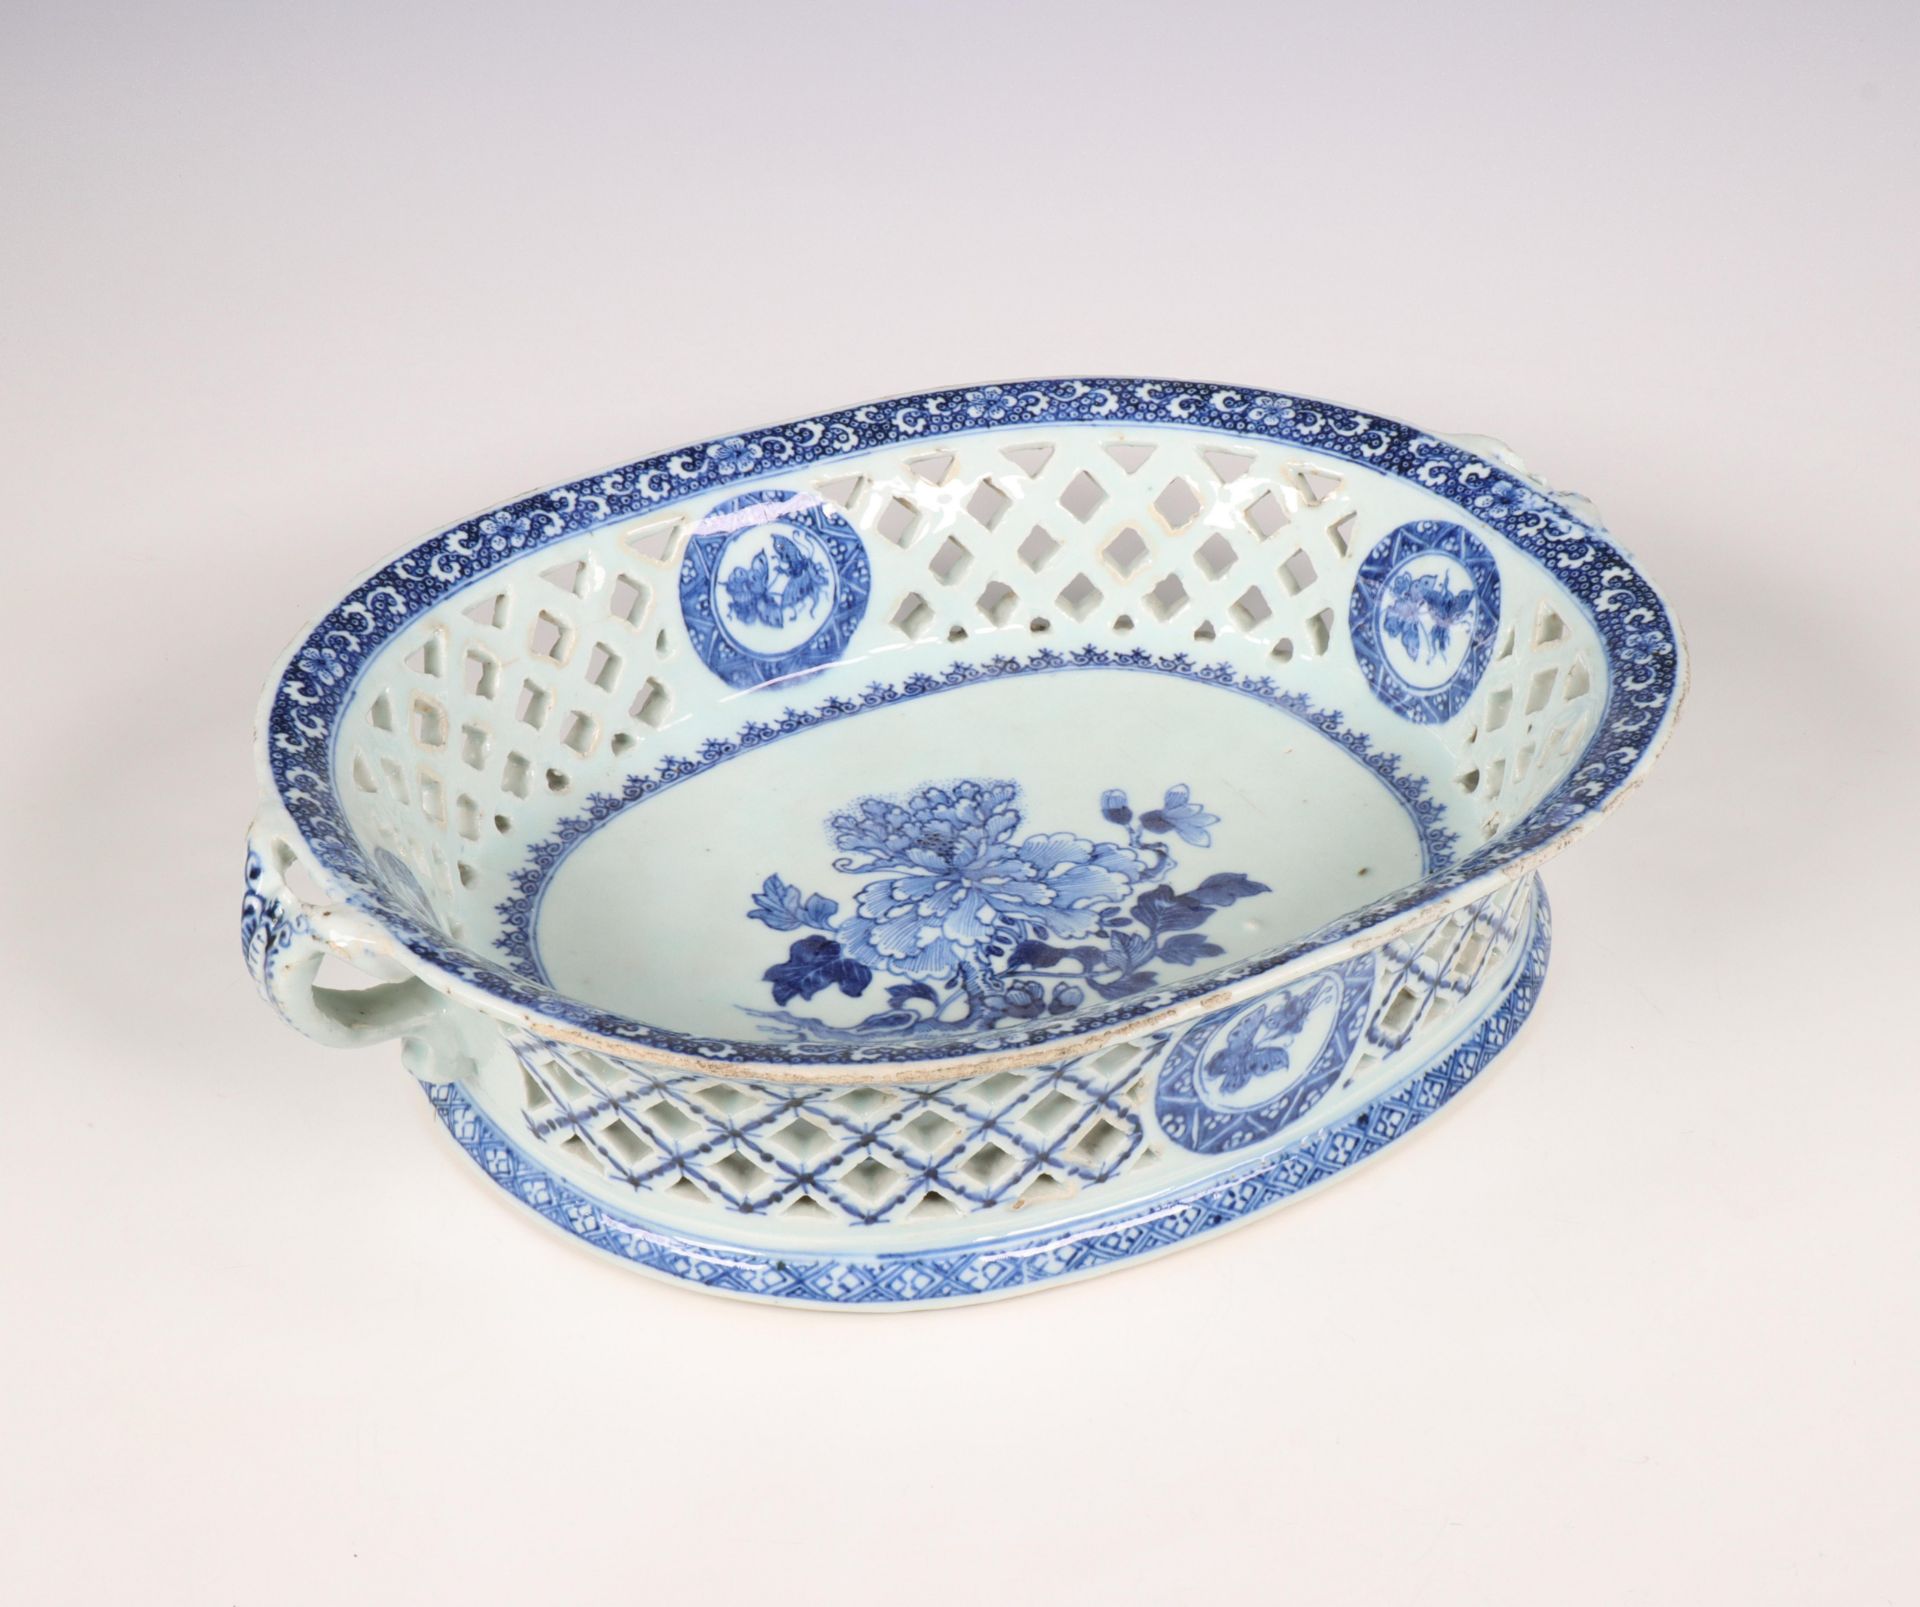 China, a blue and white porcelain basket, ca. 1800,